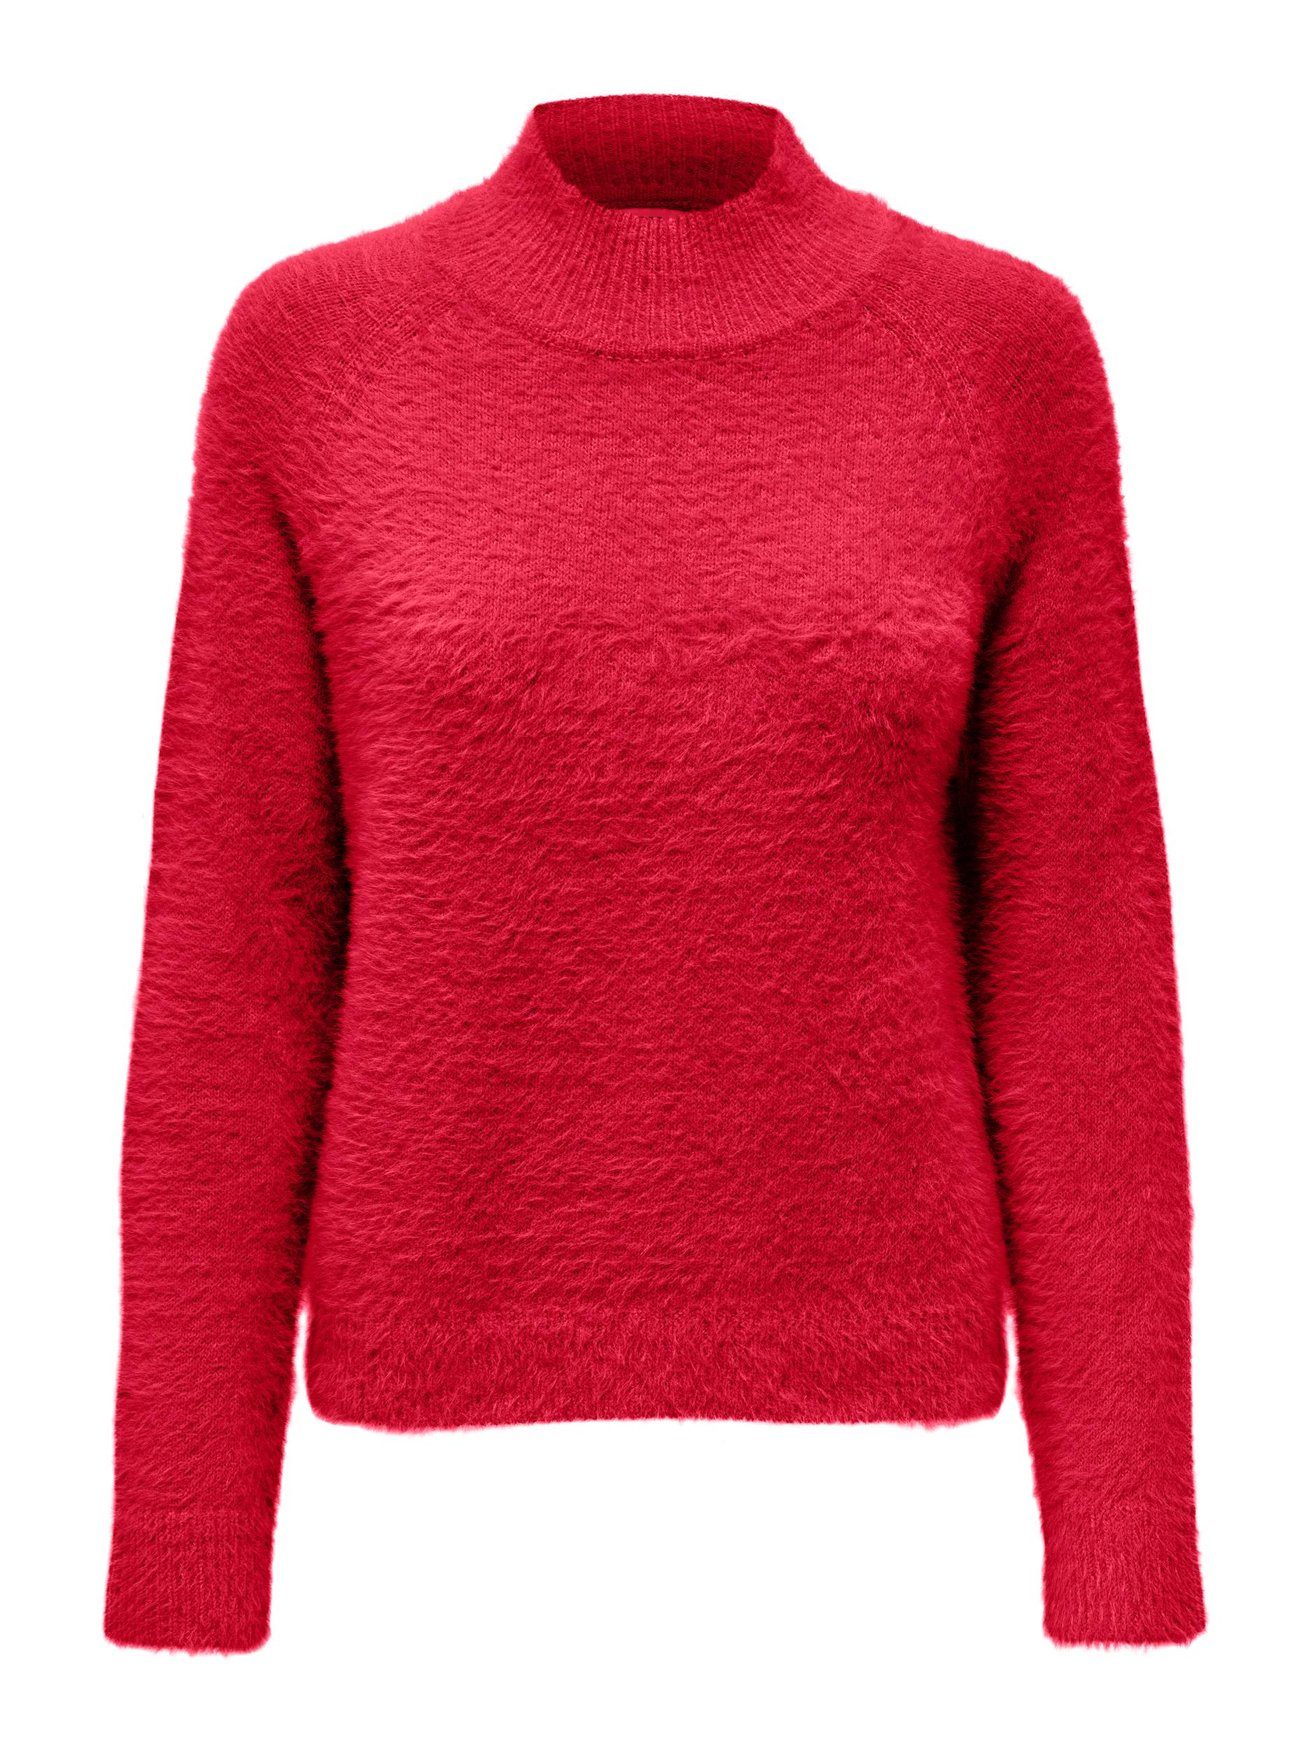 JACQUELINE de YONG Strickpullover Pullover Flauschiger Stehkragen Sweater Gestrickt JDYJOLA 6193 in Rot